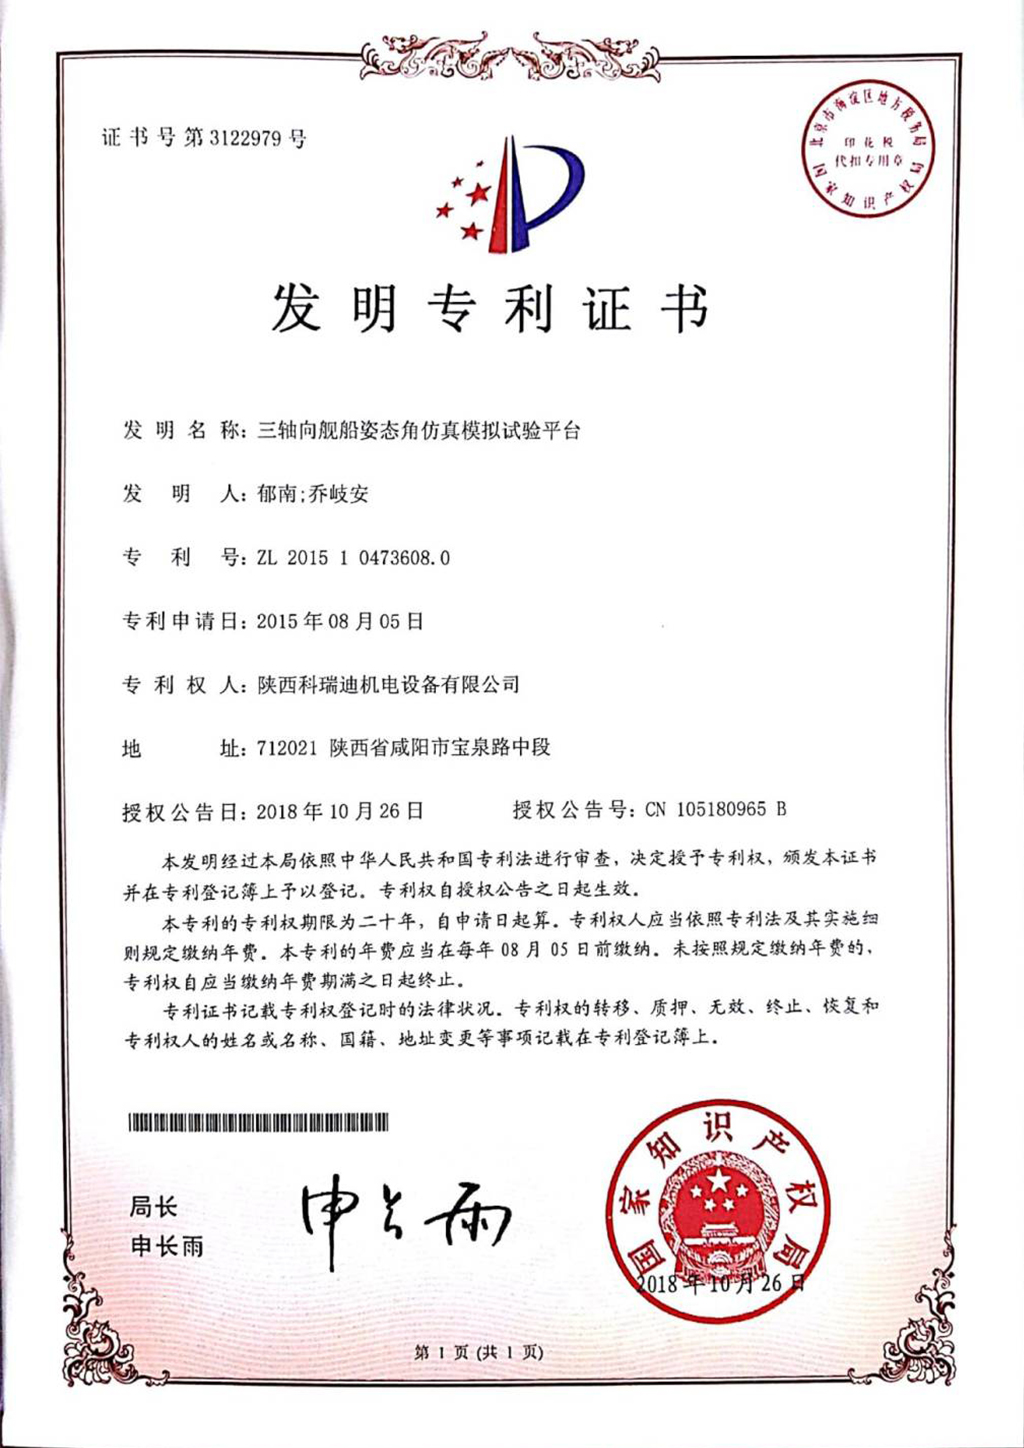 patent right certificate of test machine